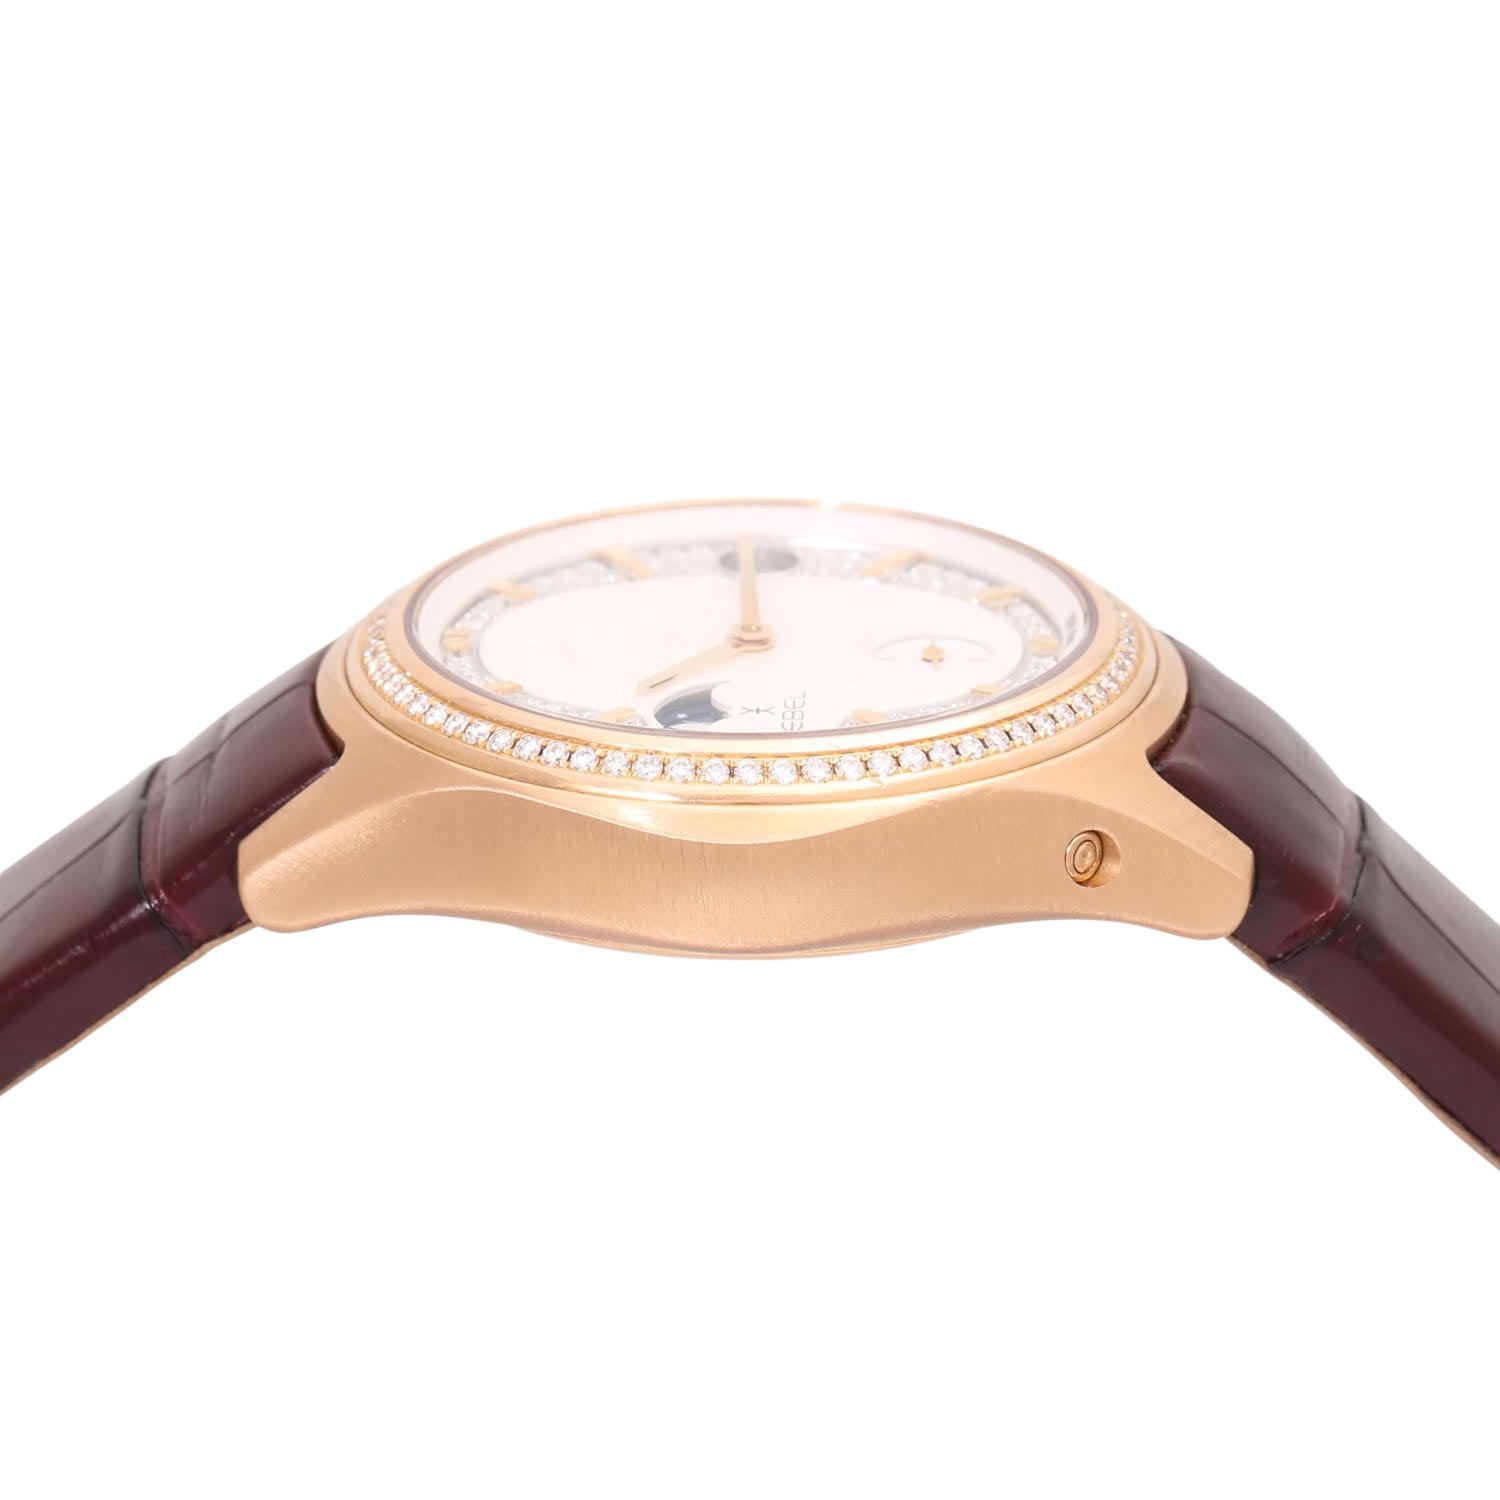 EBEL "La Maison" sehr seltene, streng limitierte Damen Armbanduhr, Ref. 1216349. NP 15.900,- €. - Image 4 of 8